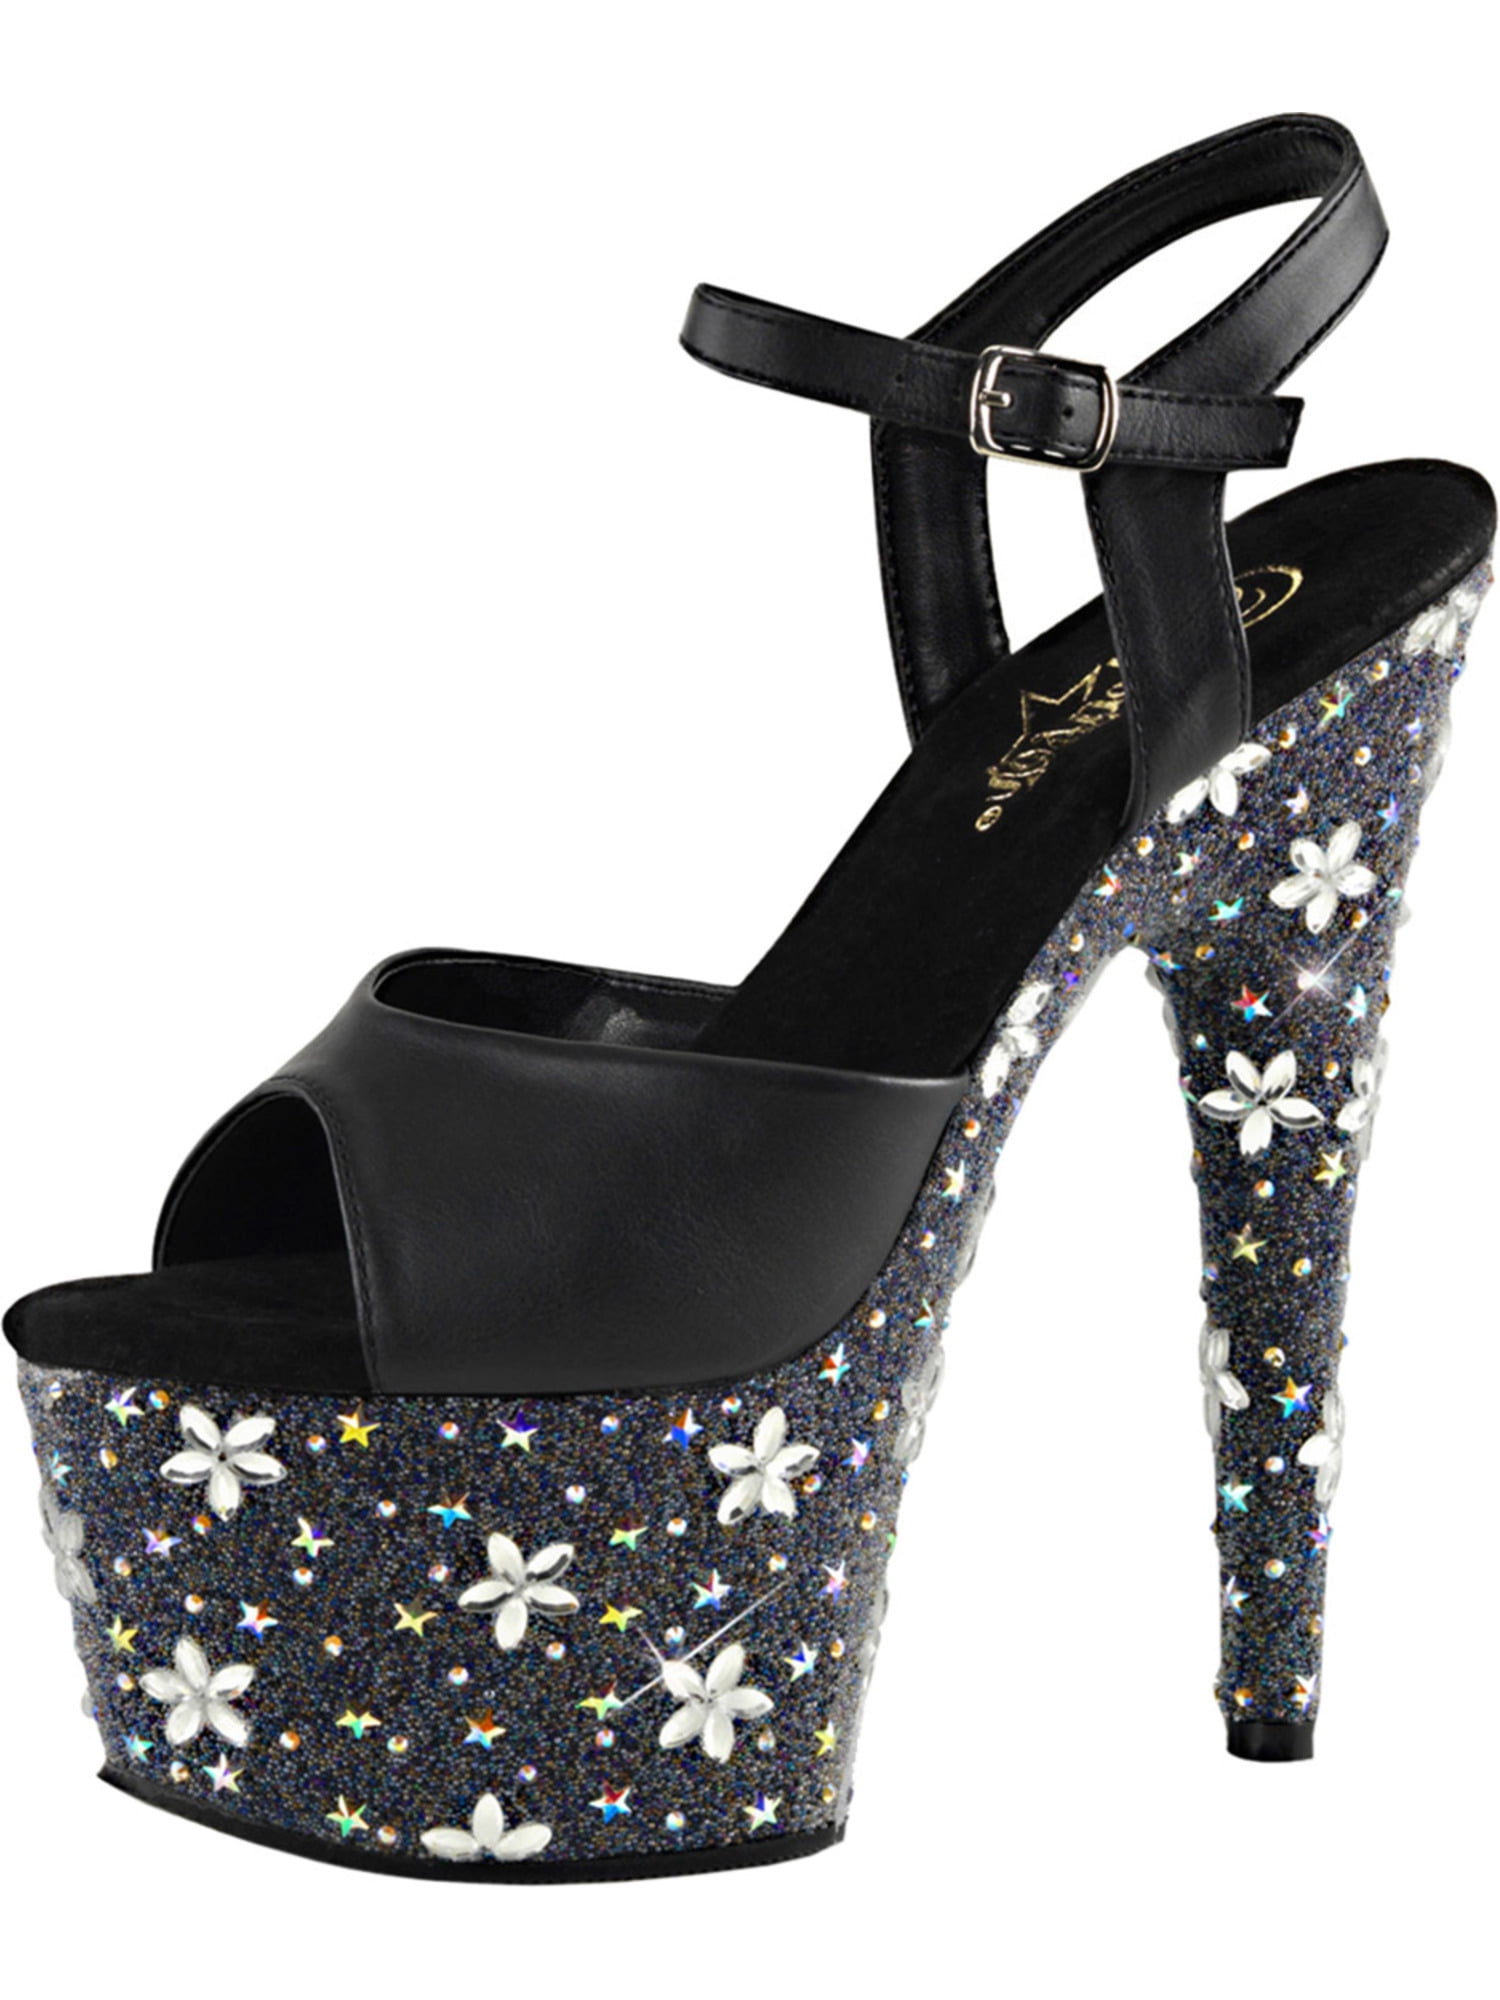 black heels with silver rhinestones